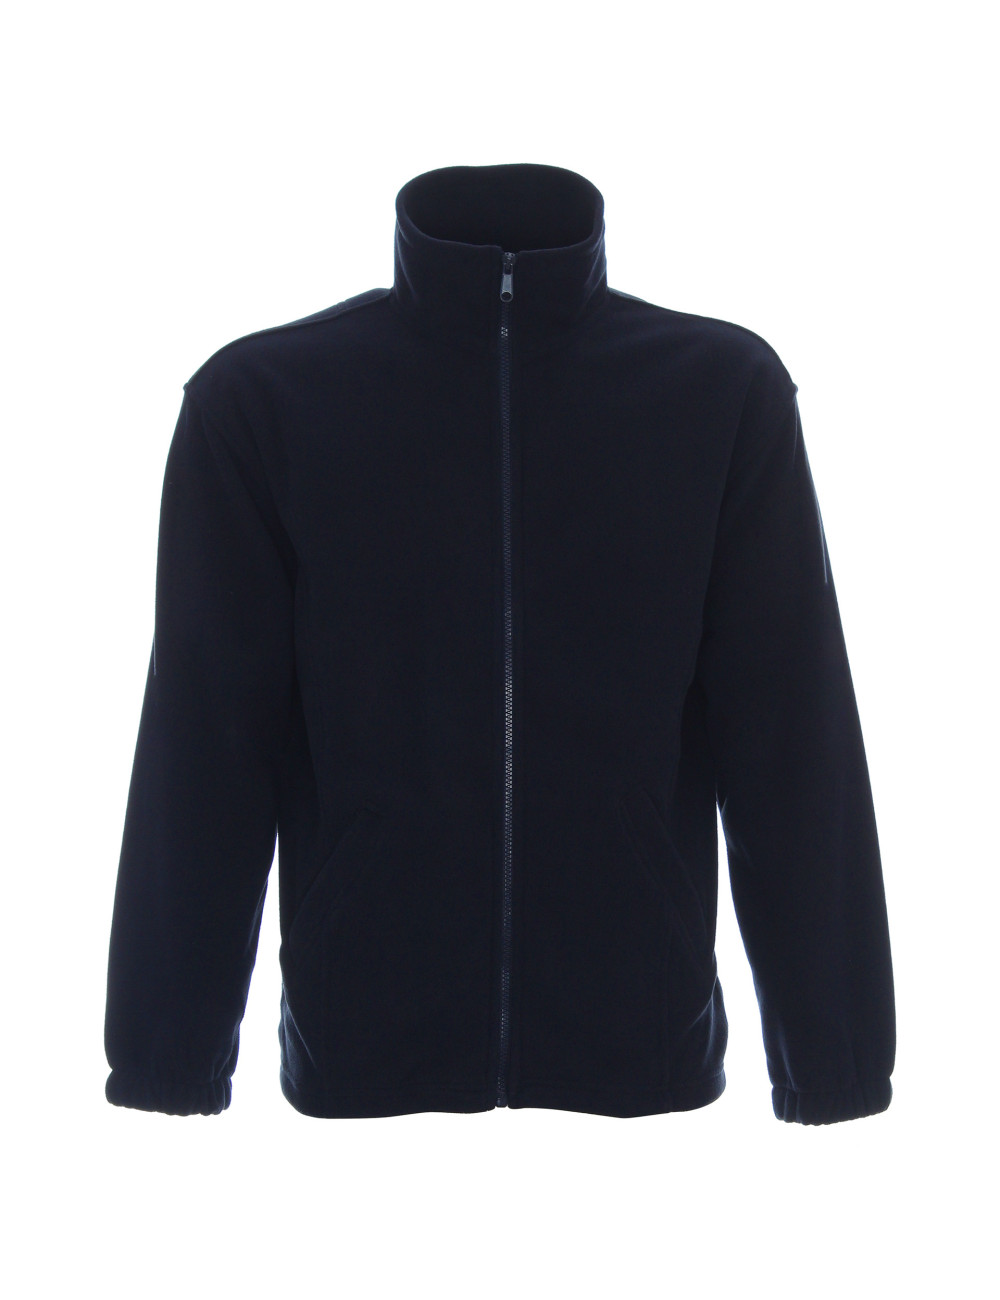 Herren-Fleece-Sweatshirt 280 g doppelt marineblau Promostars